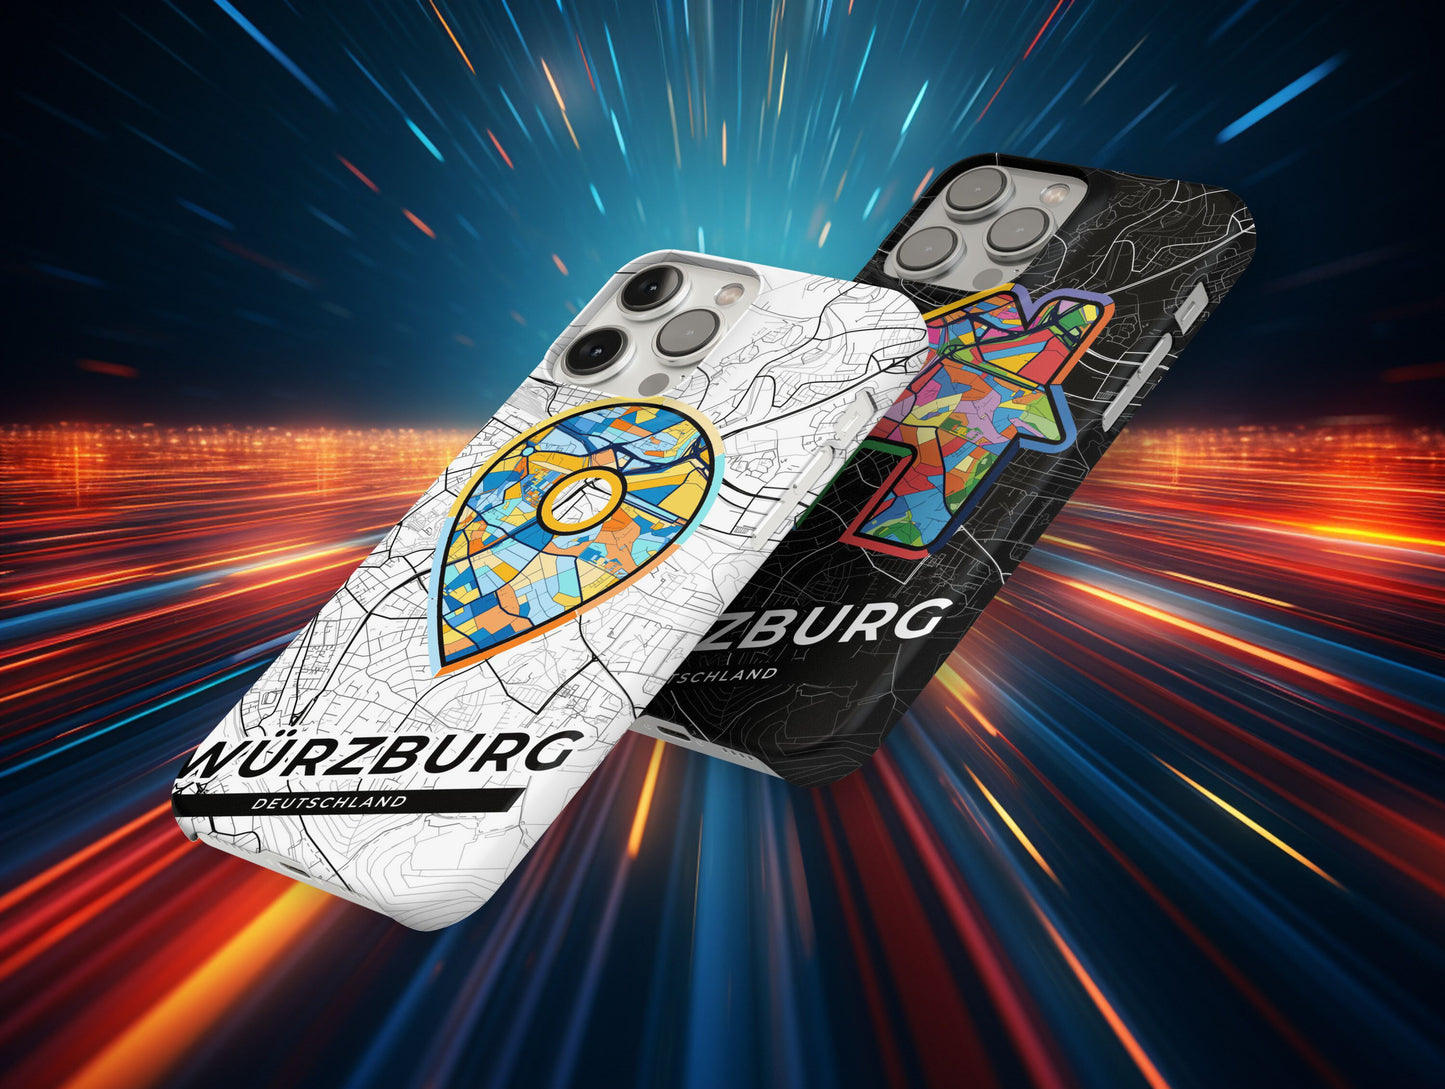 Würzburg Deutschland slim phone case with colorful icon. Birthday, wedding or housewarming gift. Couple match cases.